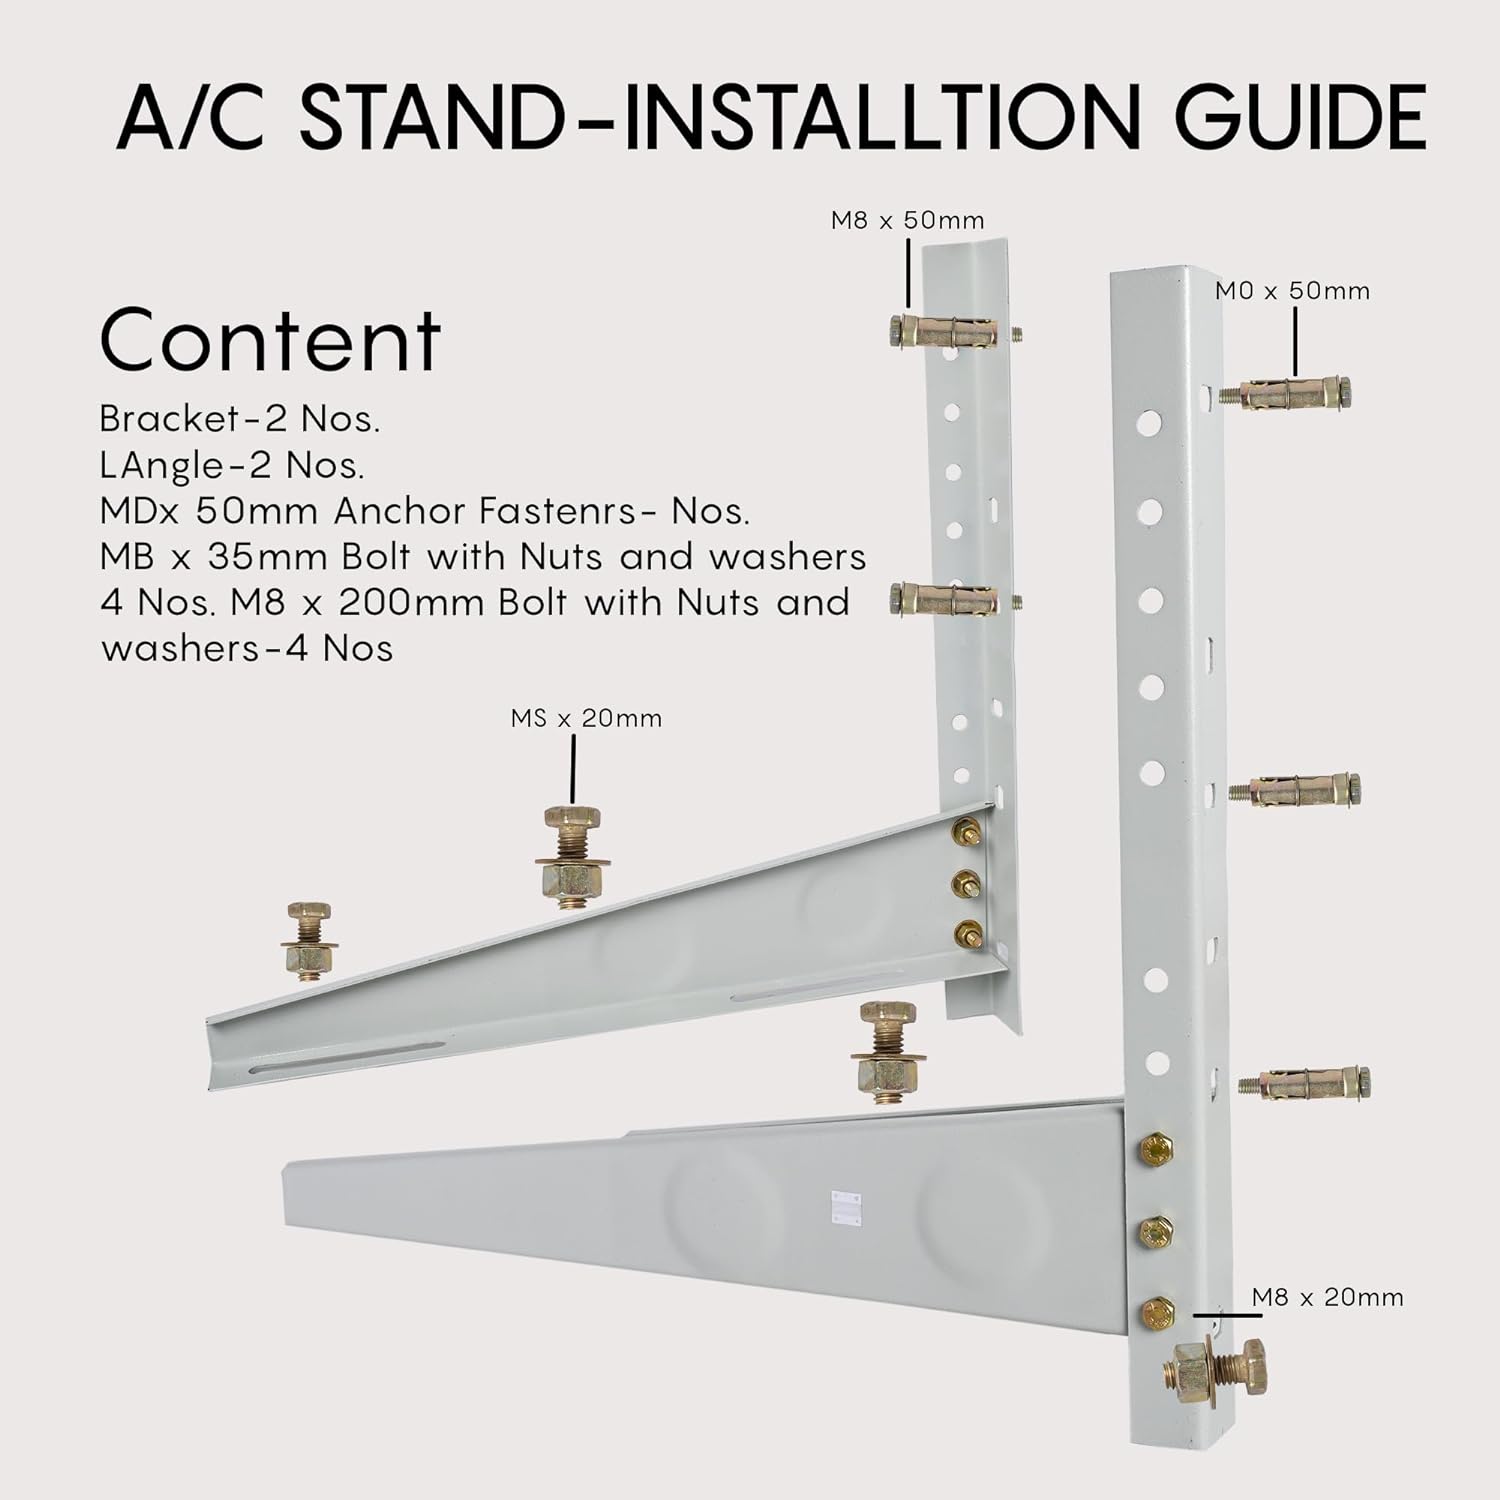 AC Outdoor unit stand nut bolt presentation with description